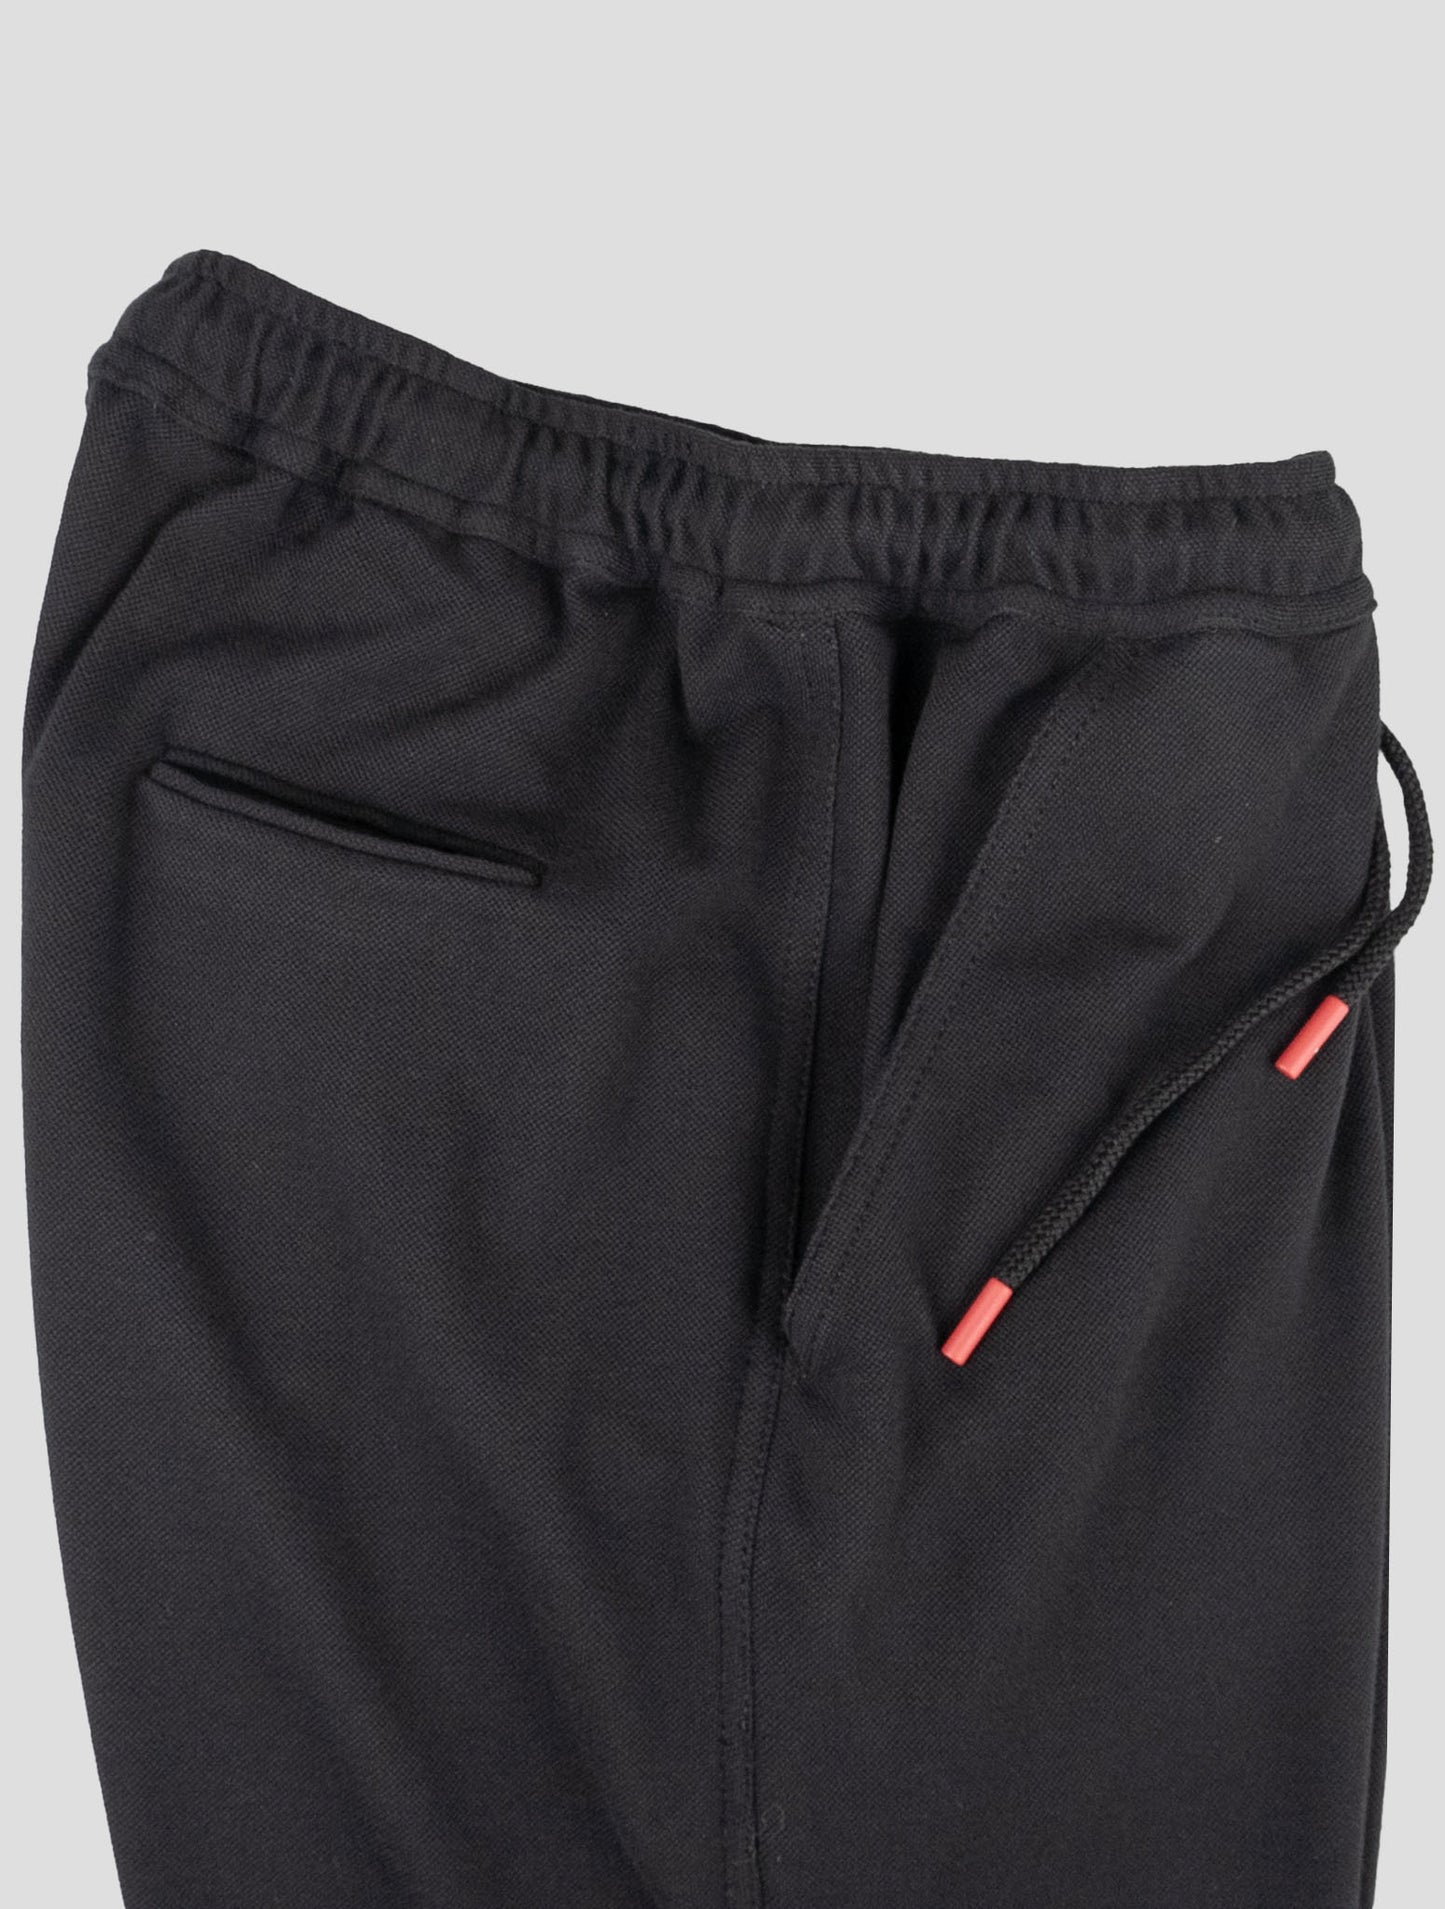 Kiton Matching Outfit - Gray Umbi and Black Short Pants Tracksuit